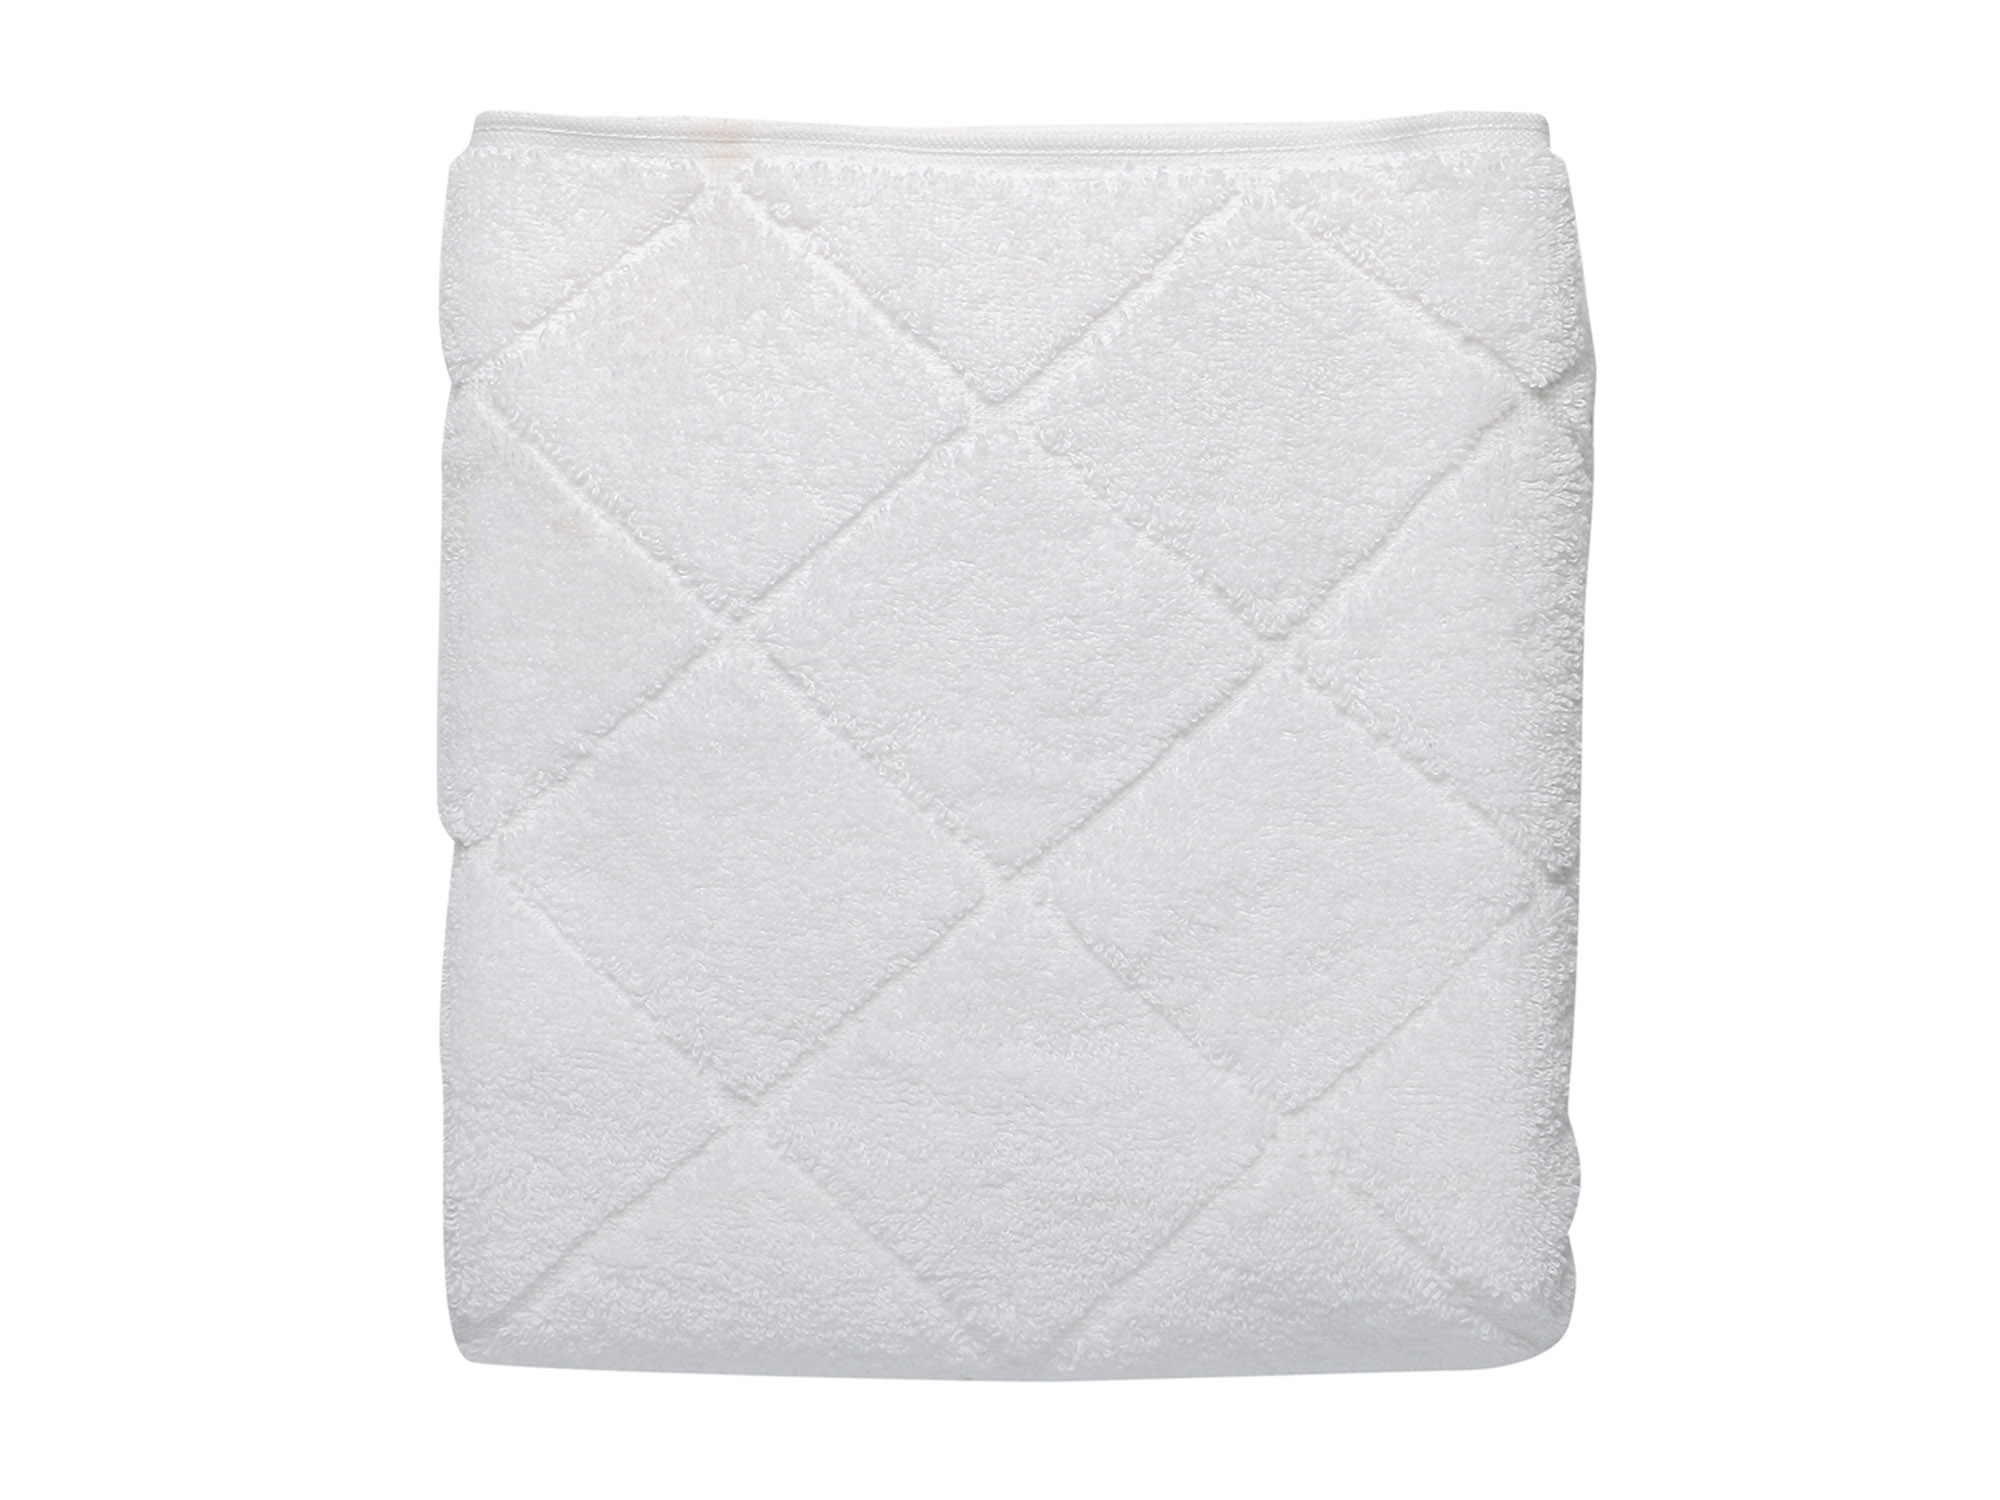 BATHROOM TOWEL RESTFUL WHITE 600GSM 70X140